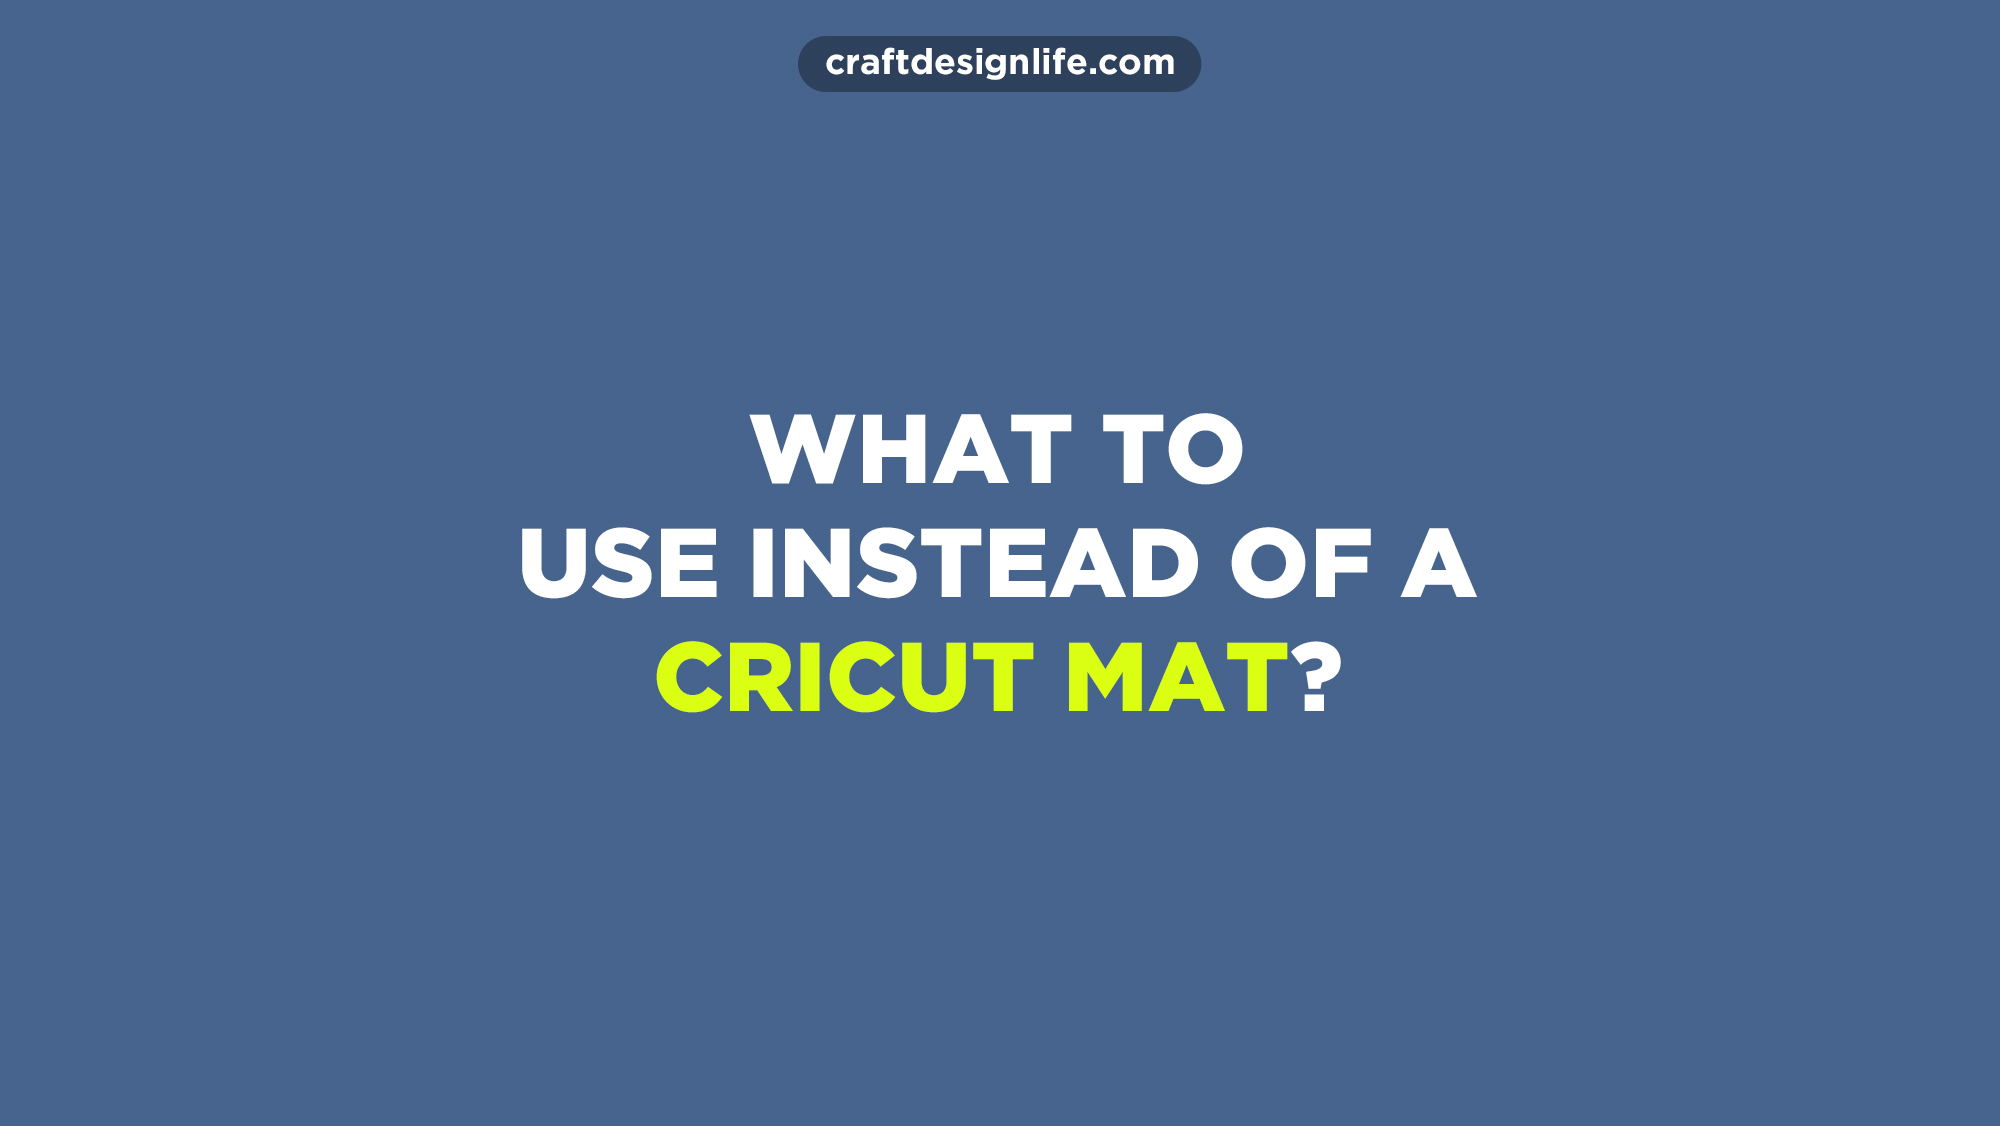 What Should I Use Instead of a Cricut Mat?